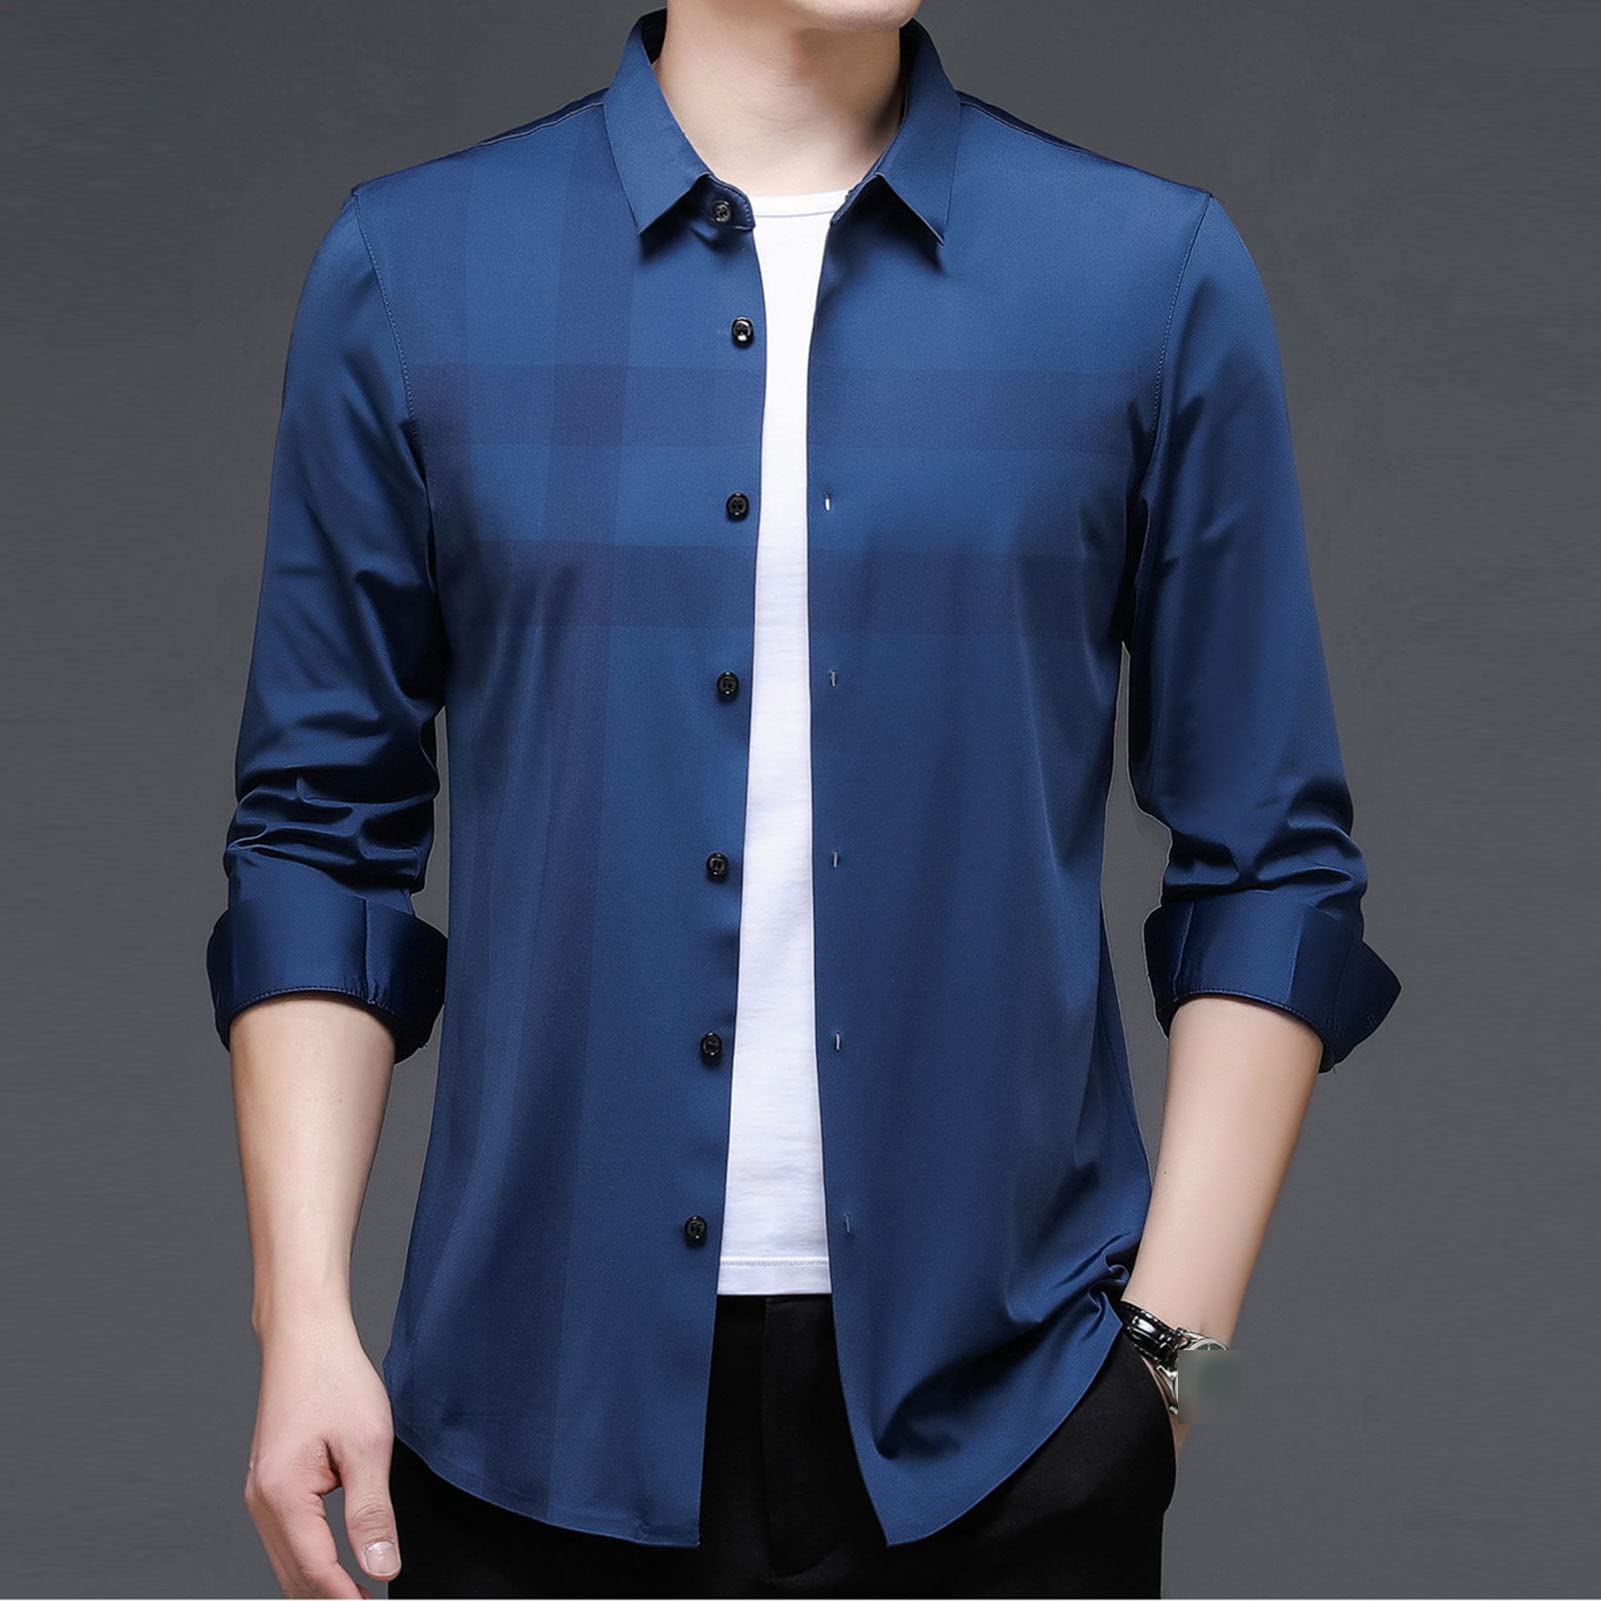 Men Plaid Wrinkle Free Dress Shirt Turn-Down Collar Button Down Business Shirts Casual Slim Fit Long Sleeve Shirts (Blue 1,4X-Large)